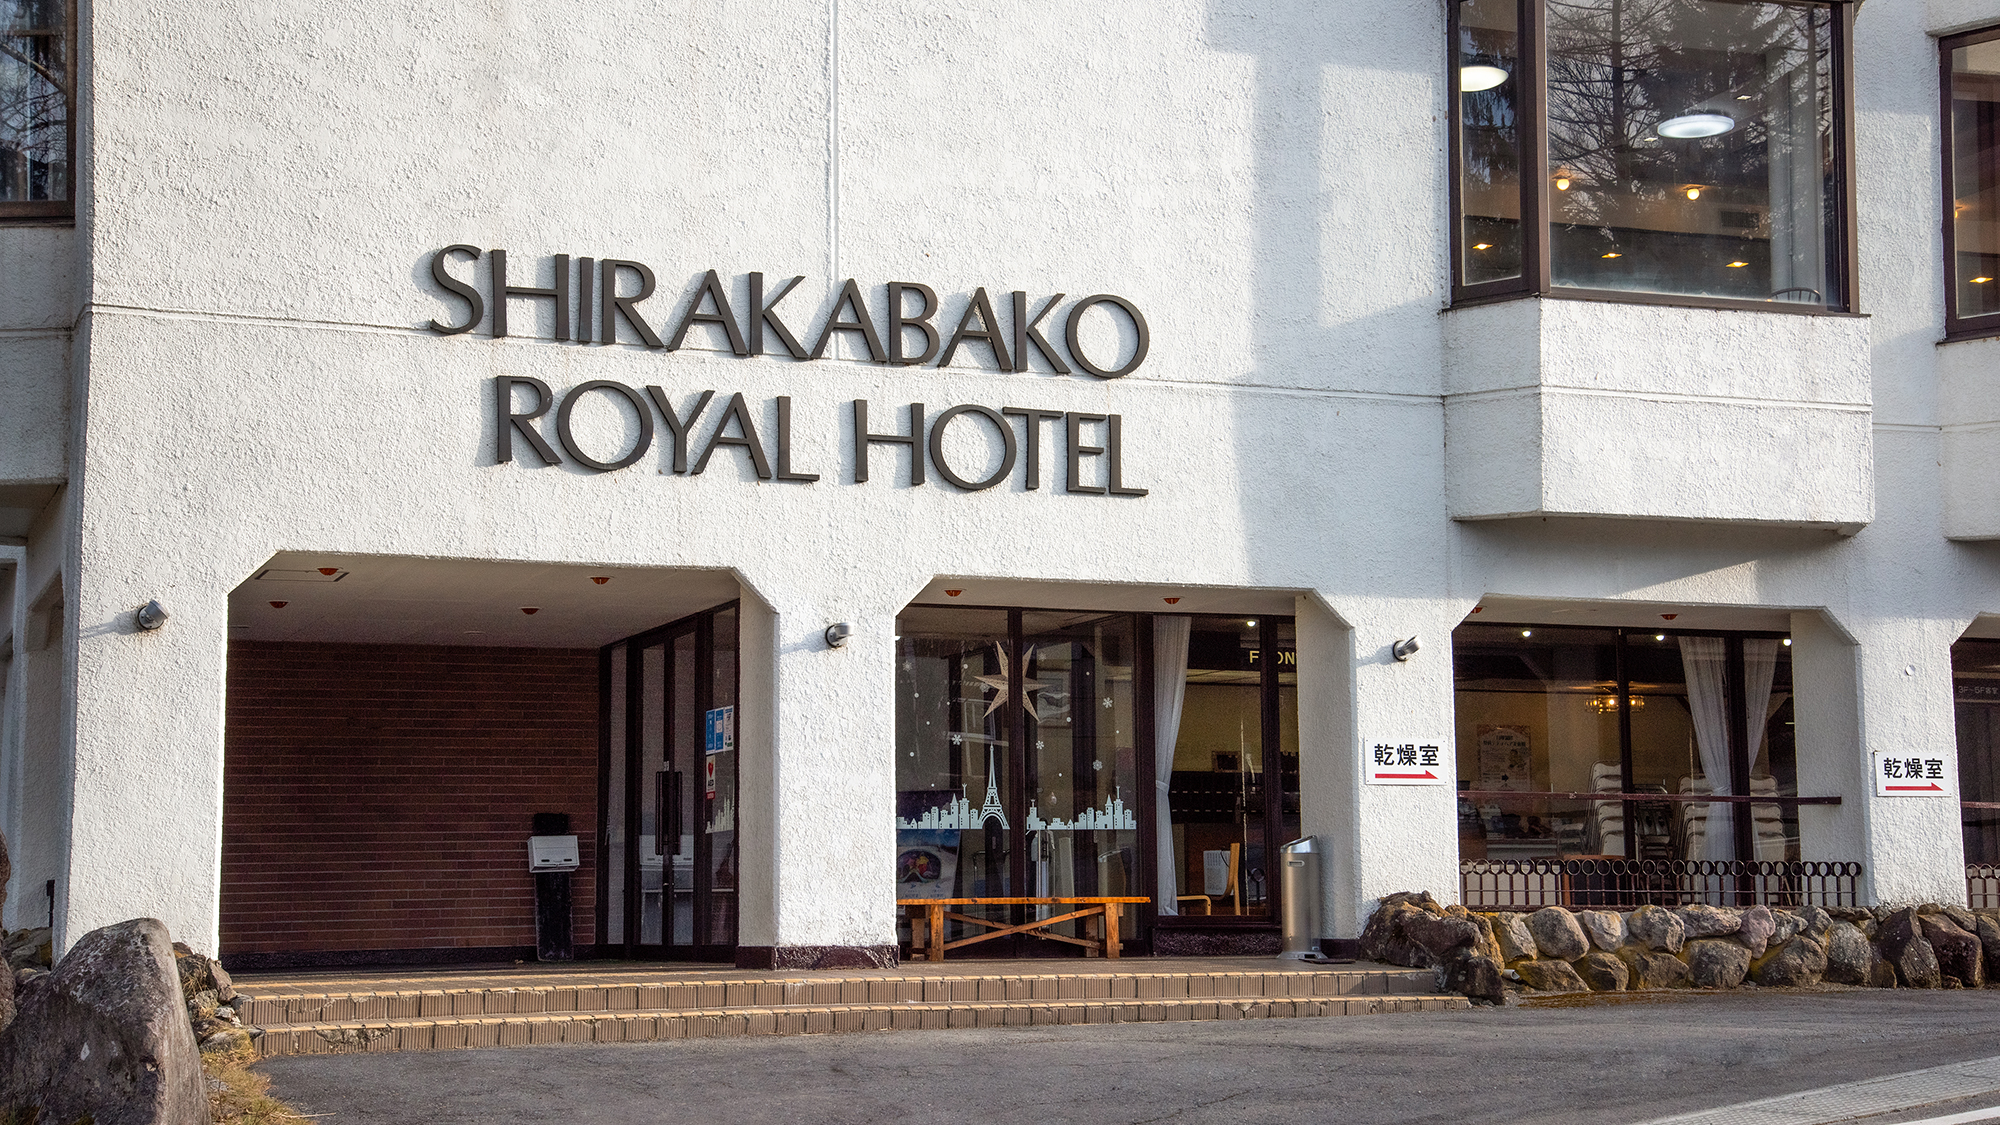 Shirakabako Royal Hotel